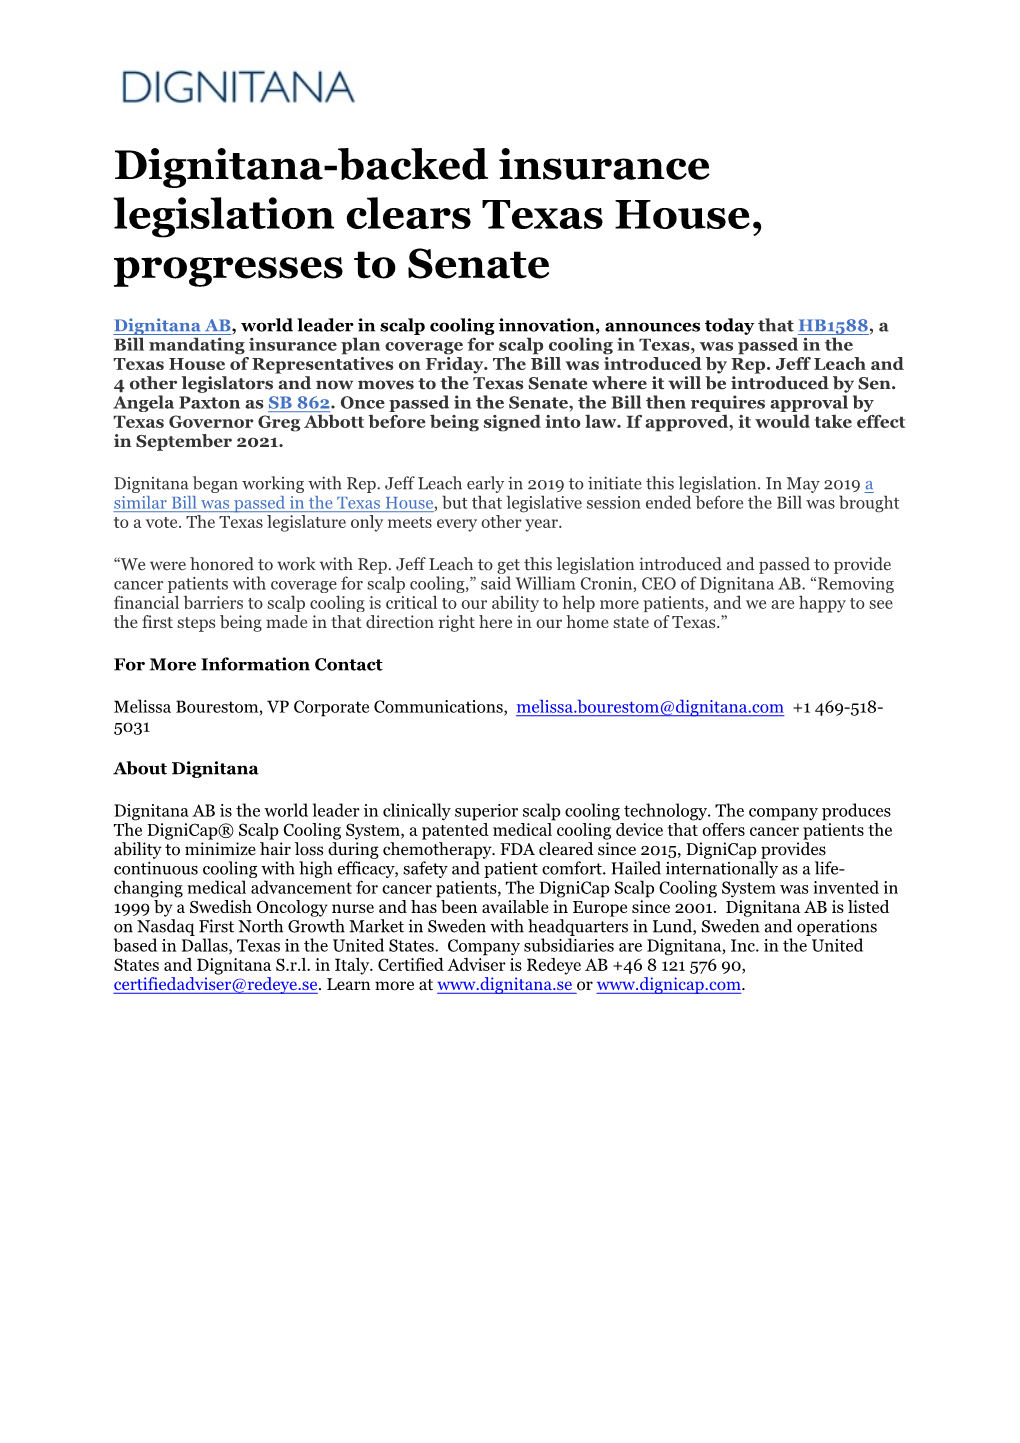 Dignitana-Backed Insurance Legislation Clears Texas House, Progresses to Senate